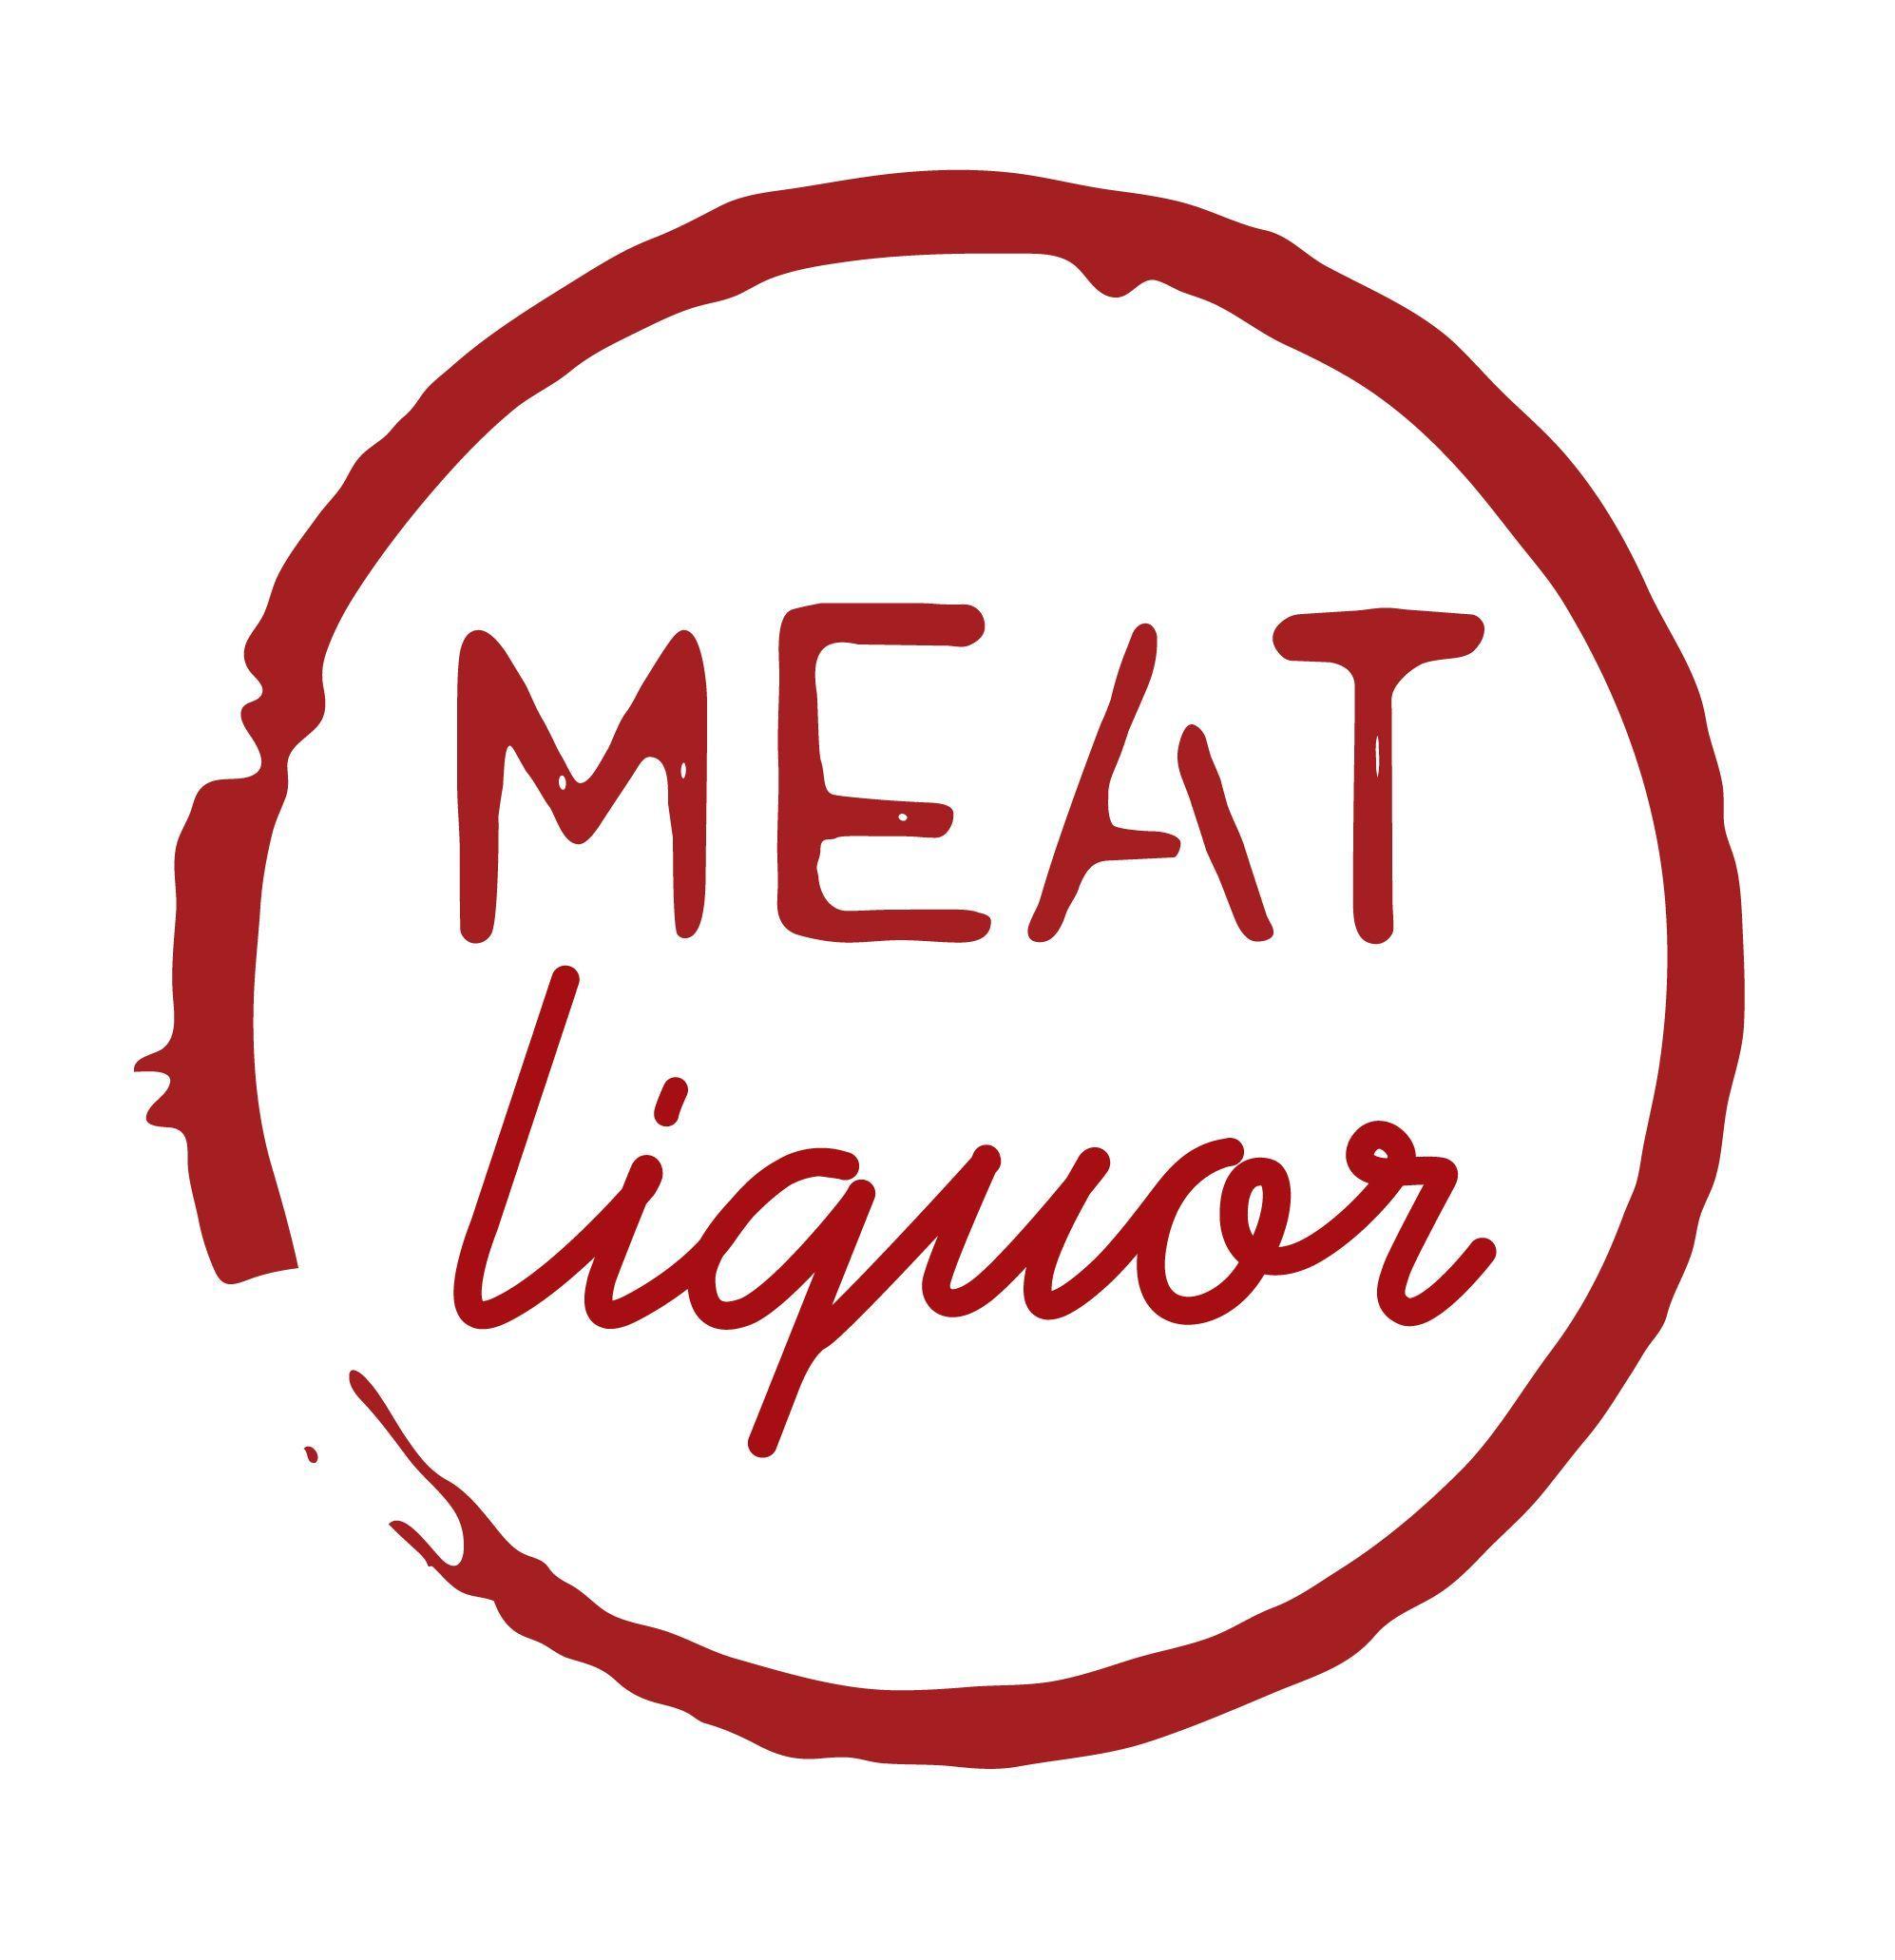 Small Meat Logo - File:MEATliquor LOGO small.jpg - Wikimedia Commons